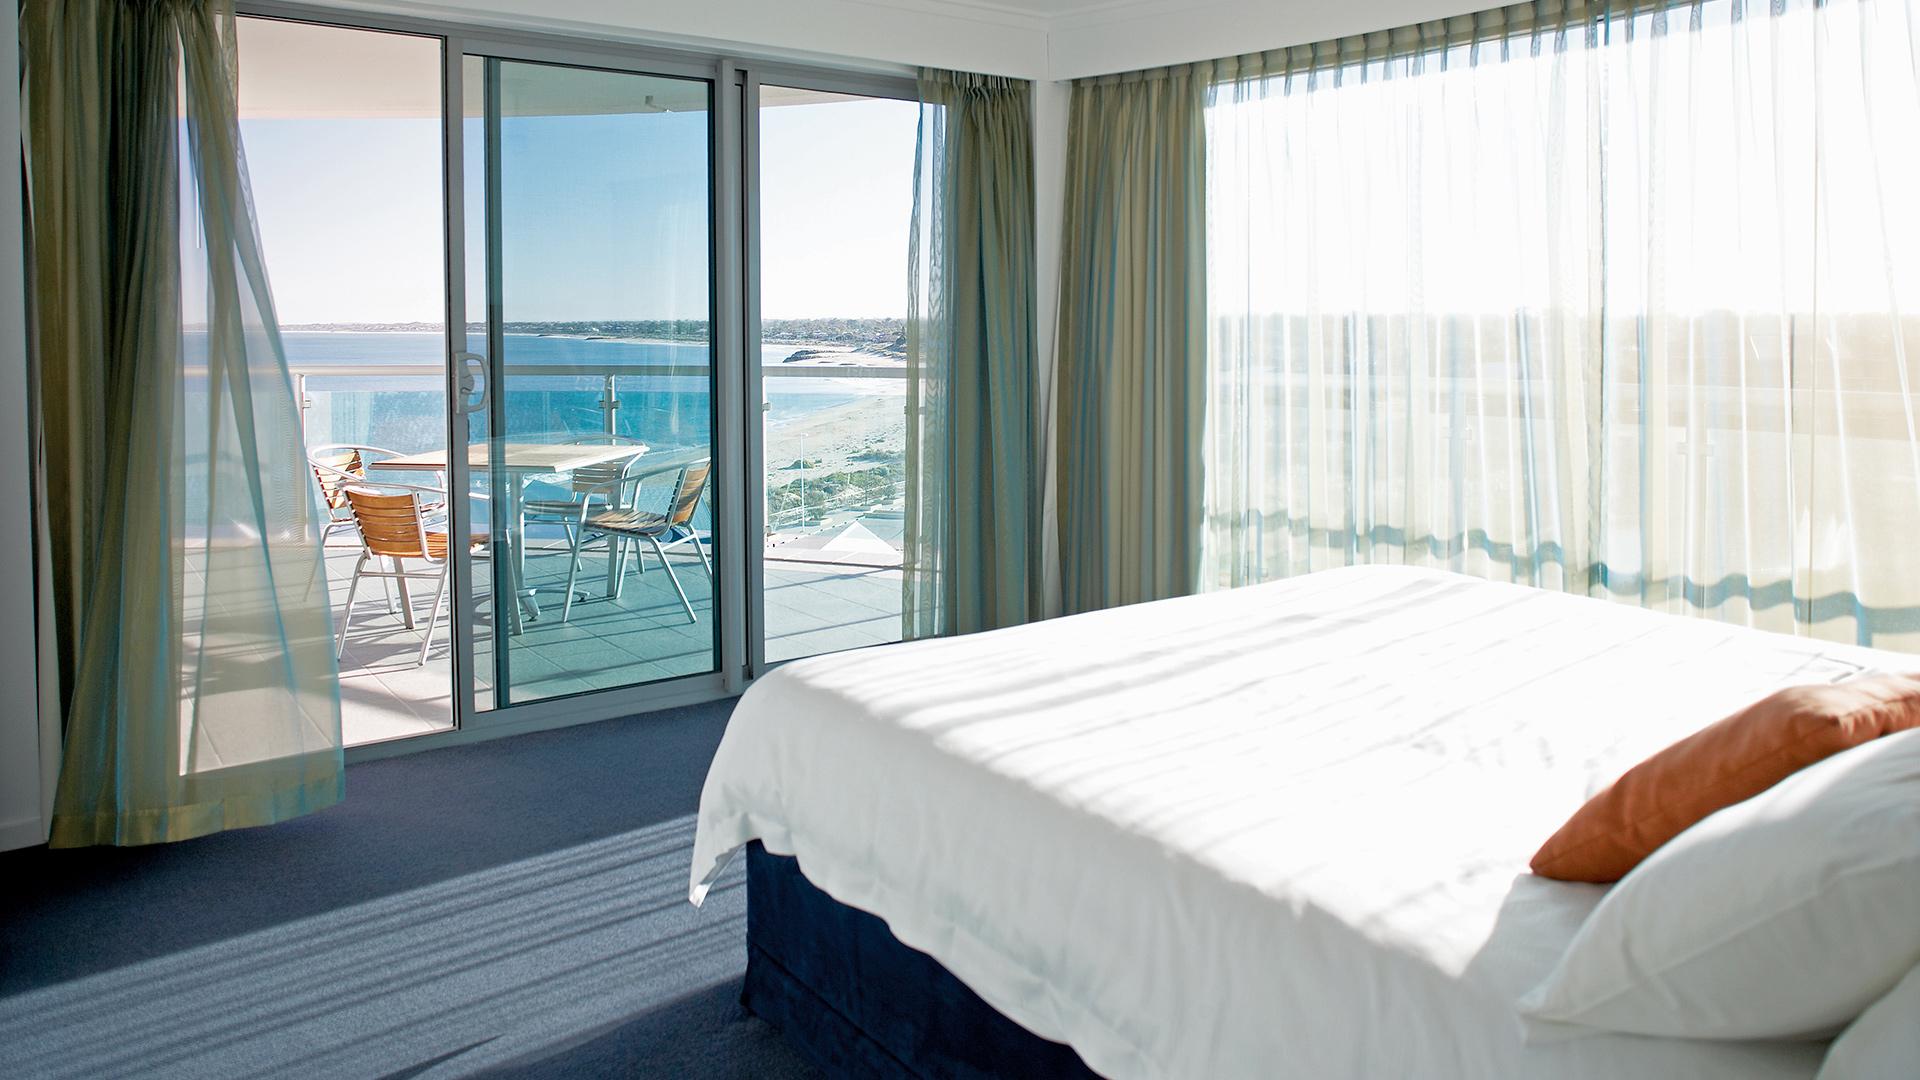 Two-Bedroom Oceanview Apartment image 1 at Seashells Mandurah by City of Mandurah, Western Australia, Australia